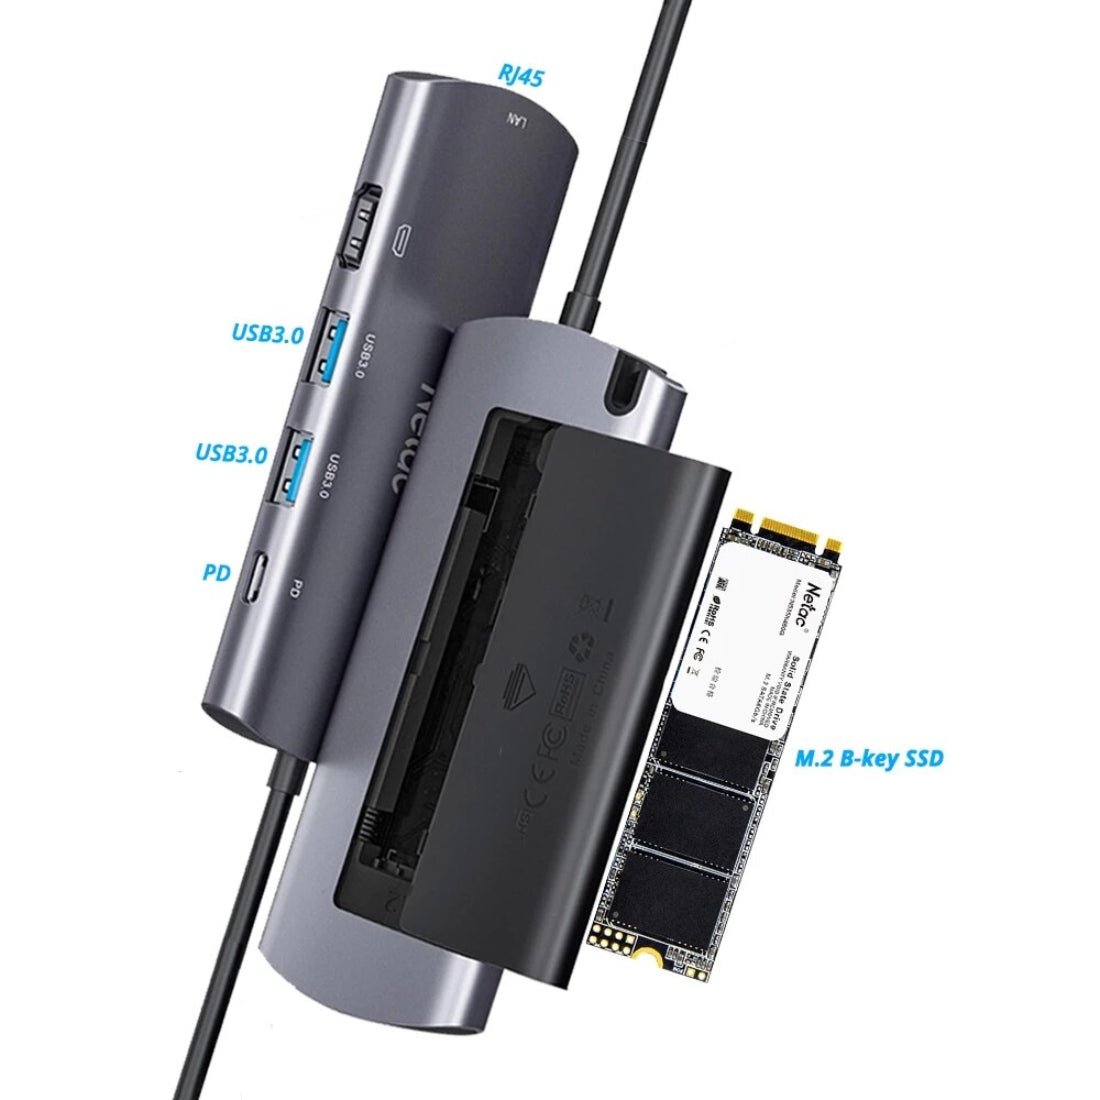 Netac WH41 M.2 External SSD Enclosure 6 in 1 Adapter - محول - Store 974 | ستور ٩٧٤